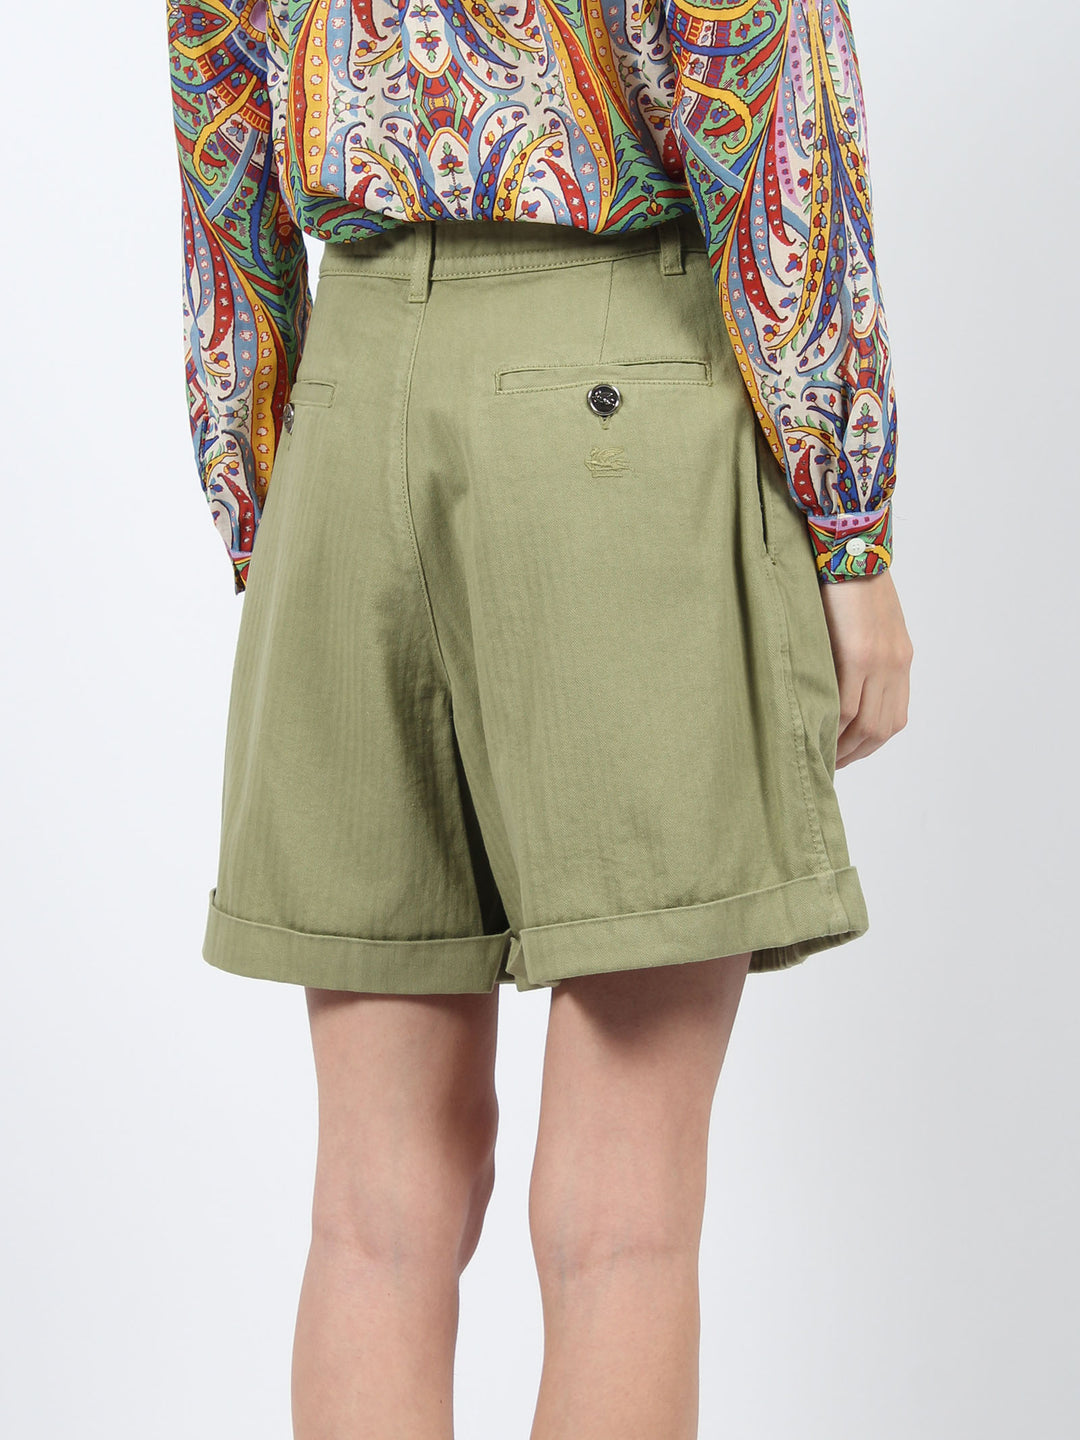 Buttoned cotton bermuda shorts